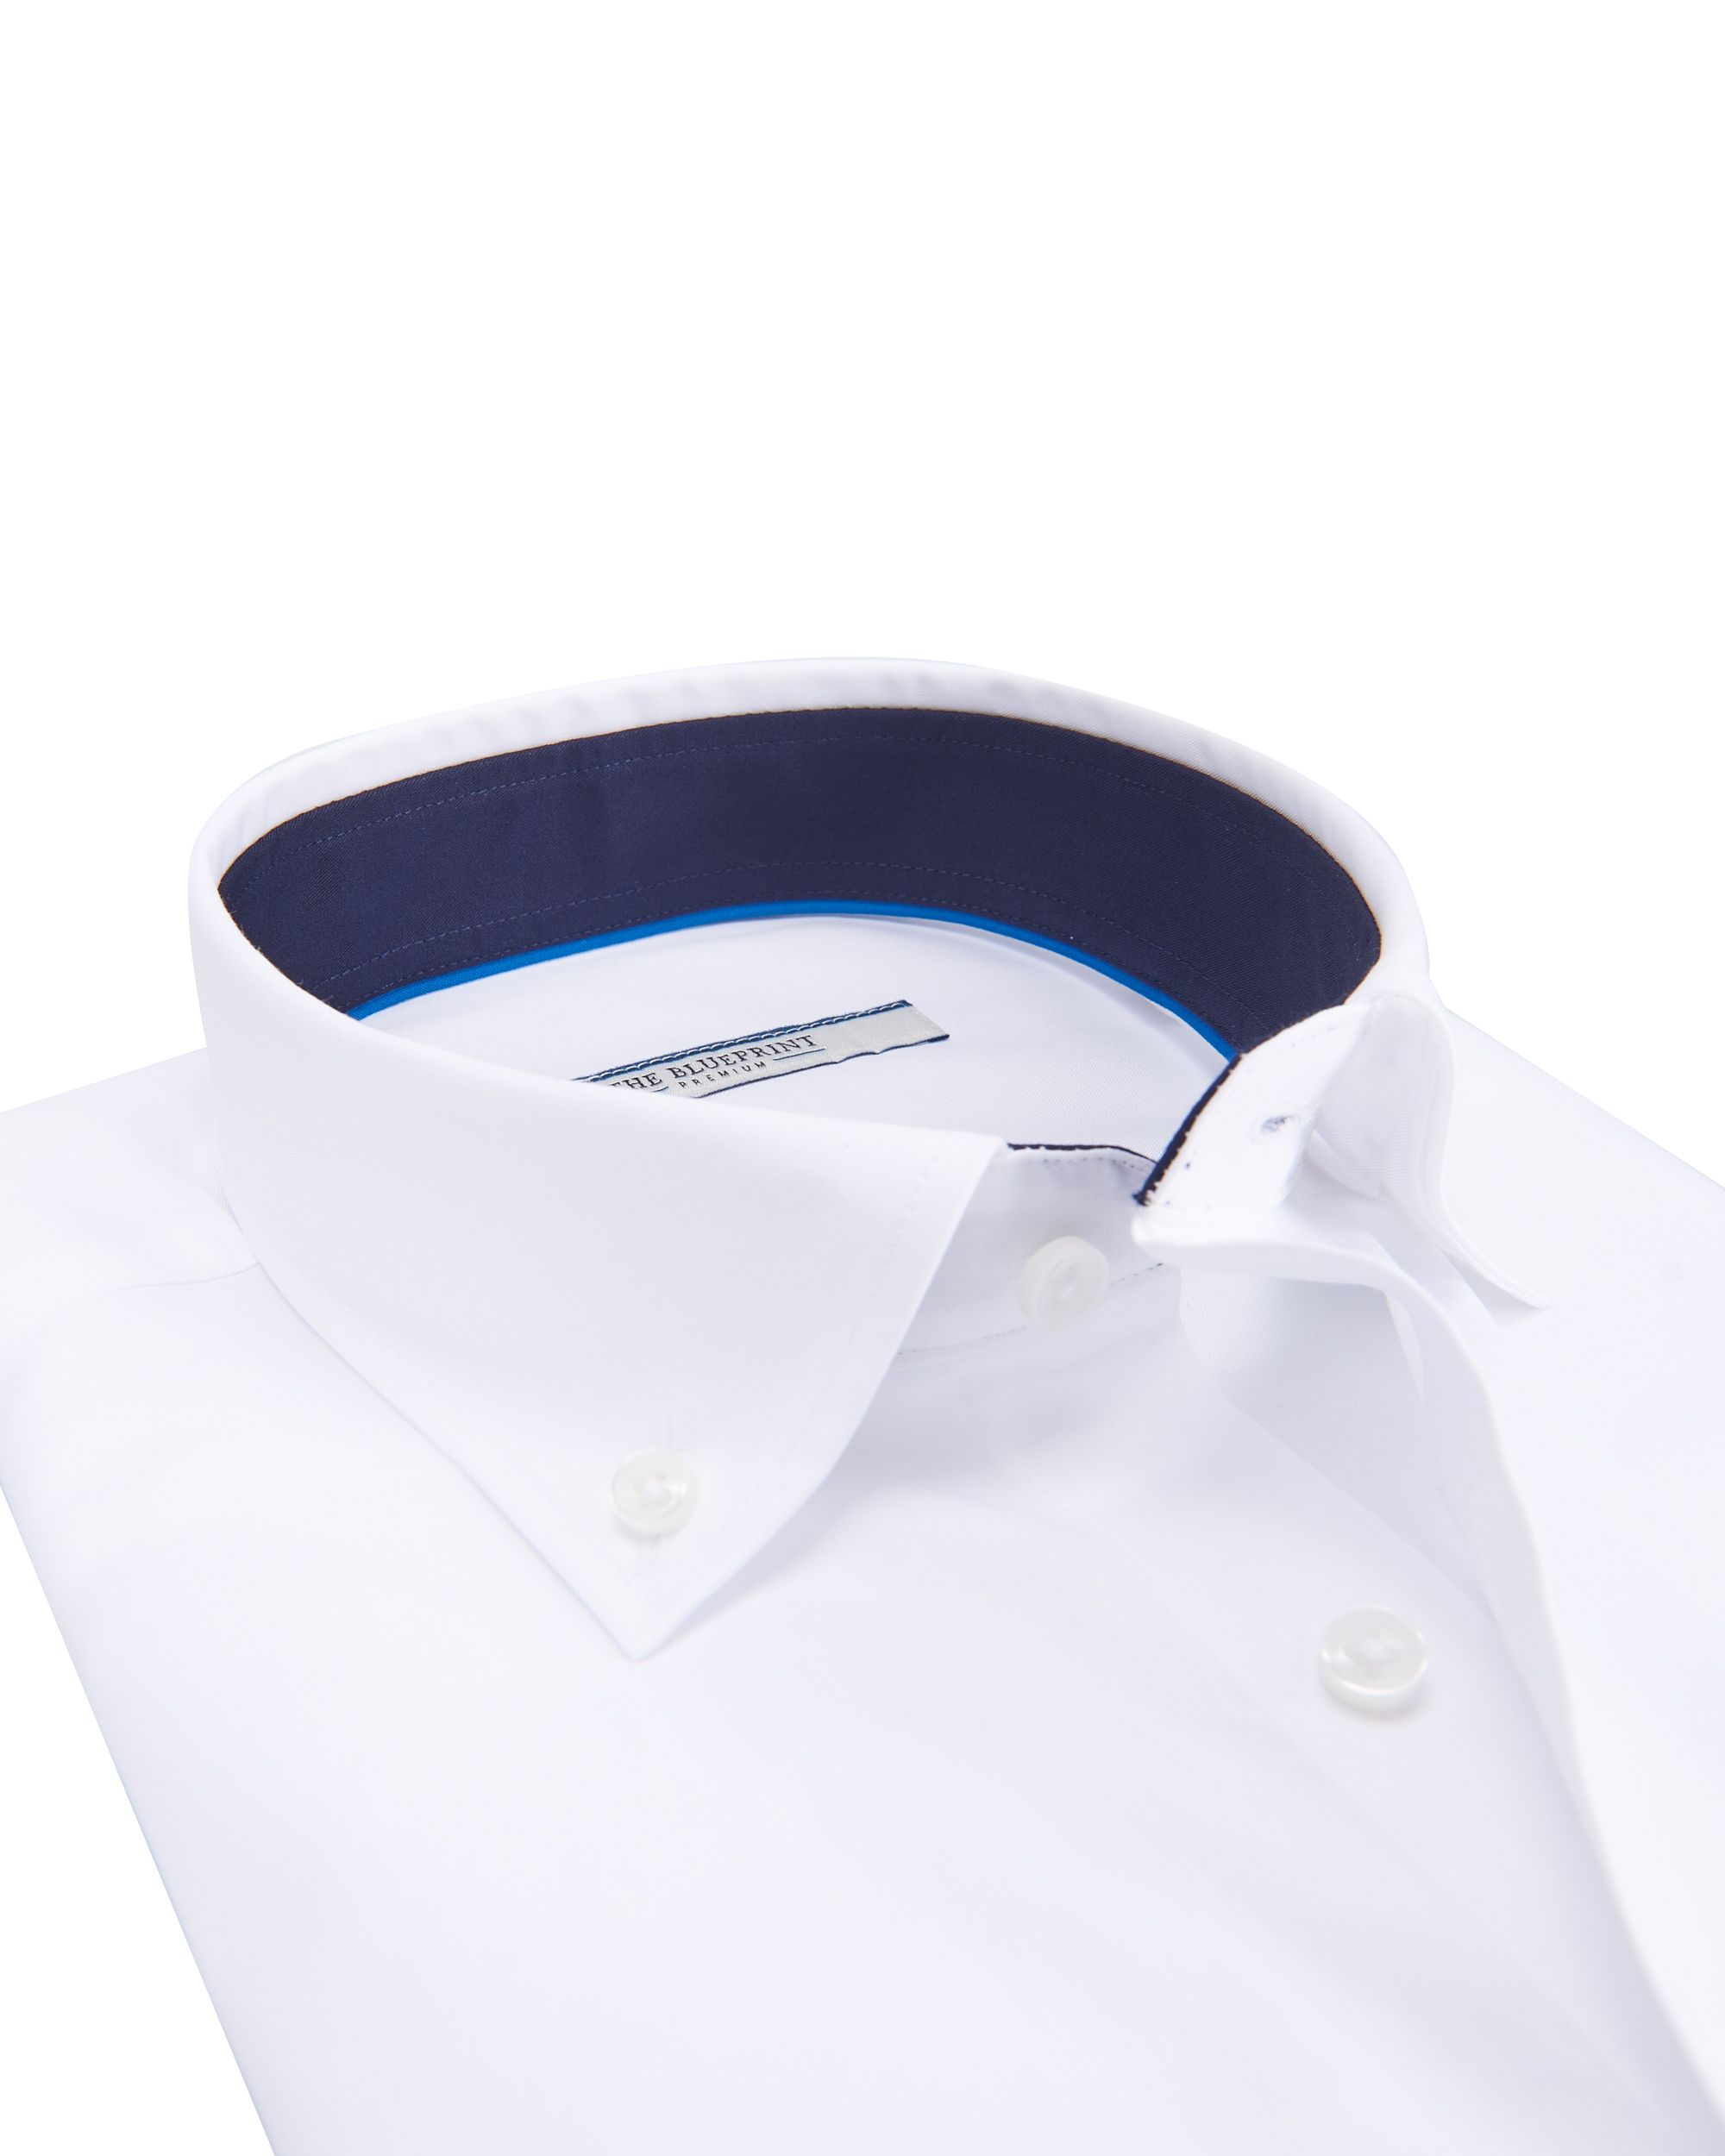 The BLUEPRINT Premium Trendy overhemd LM WHITE 084486-001-L